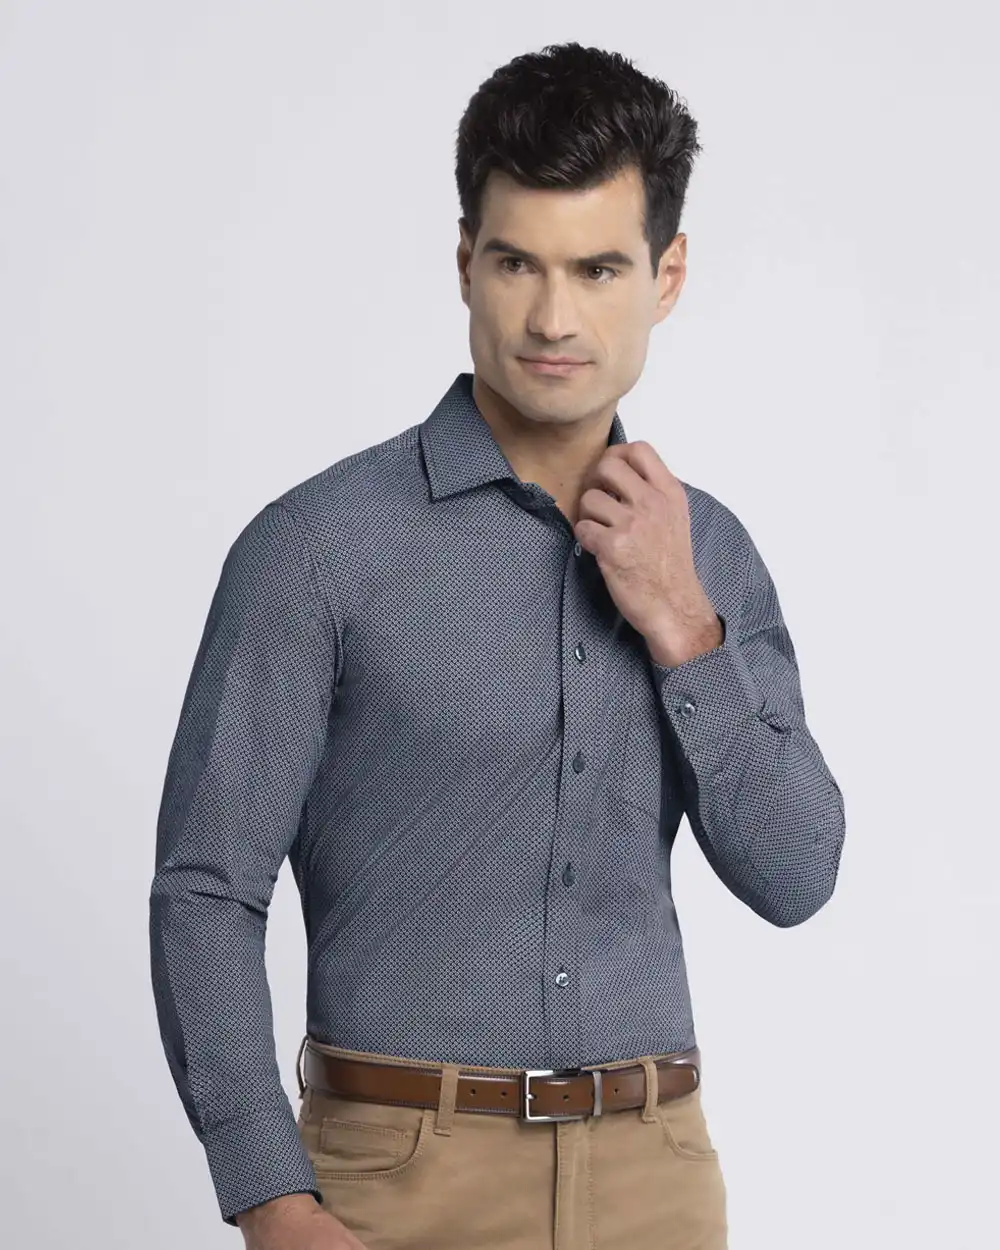 Camisa estampada de vestir slim fit manga larga para caballero pierre cardin color gris